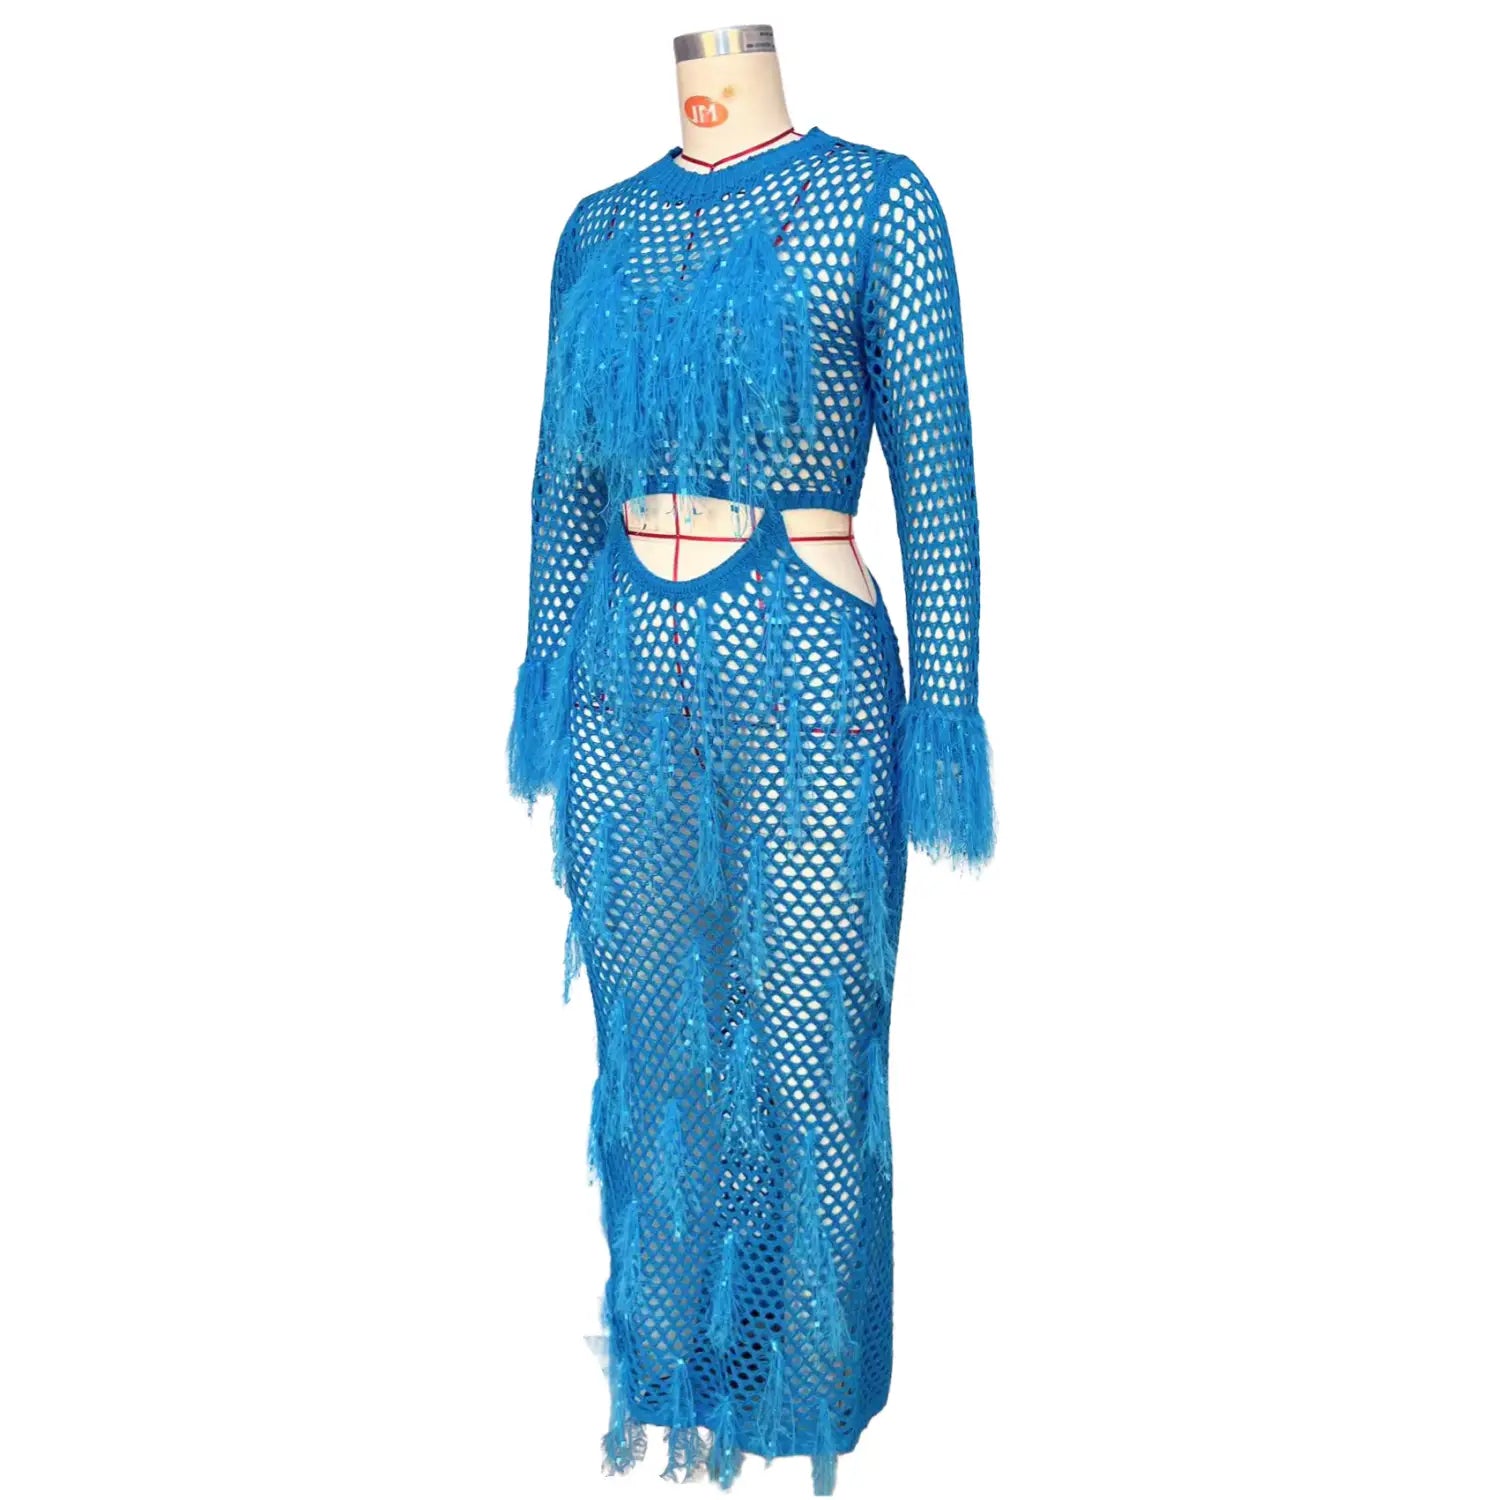 Boho Maxi Beach Dress - Handmade Knit With Mink Tassel Details